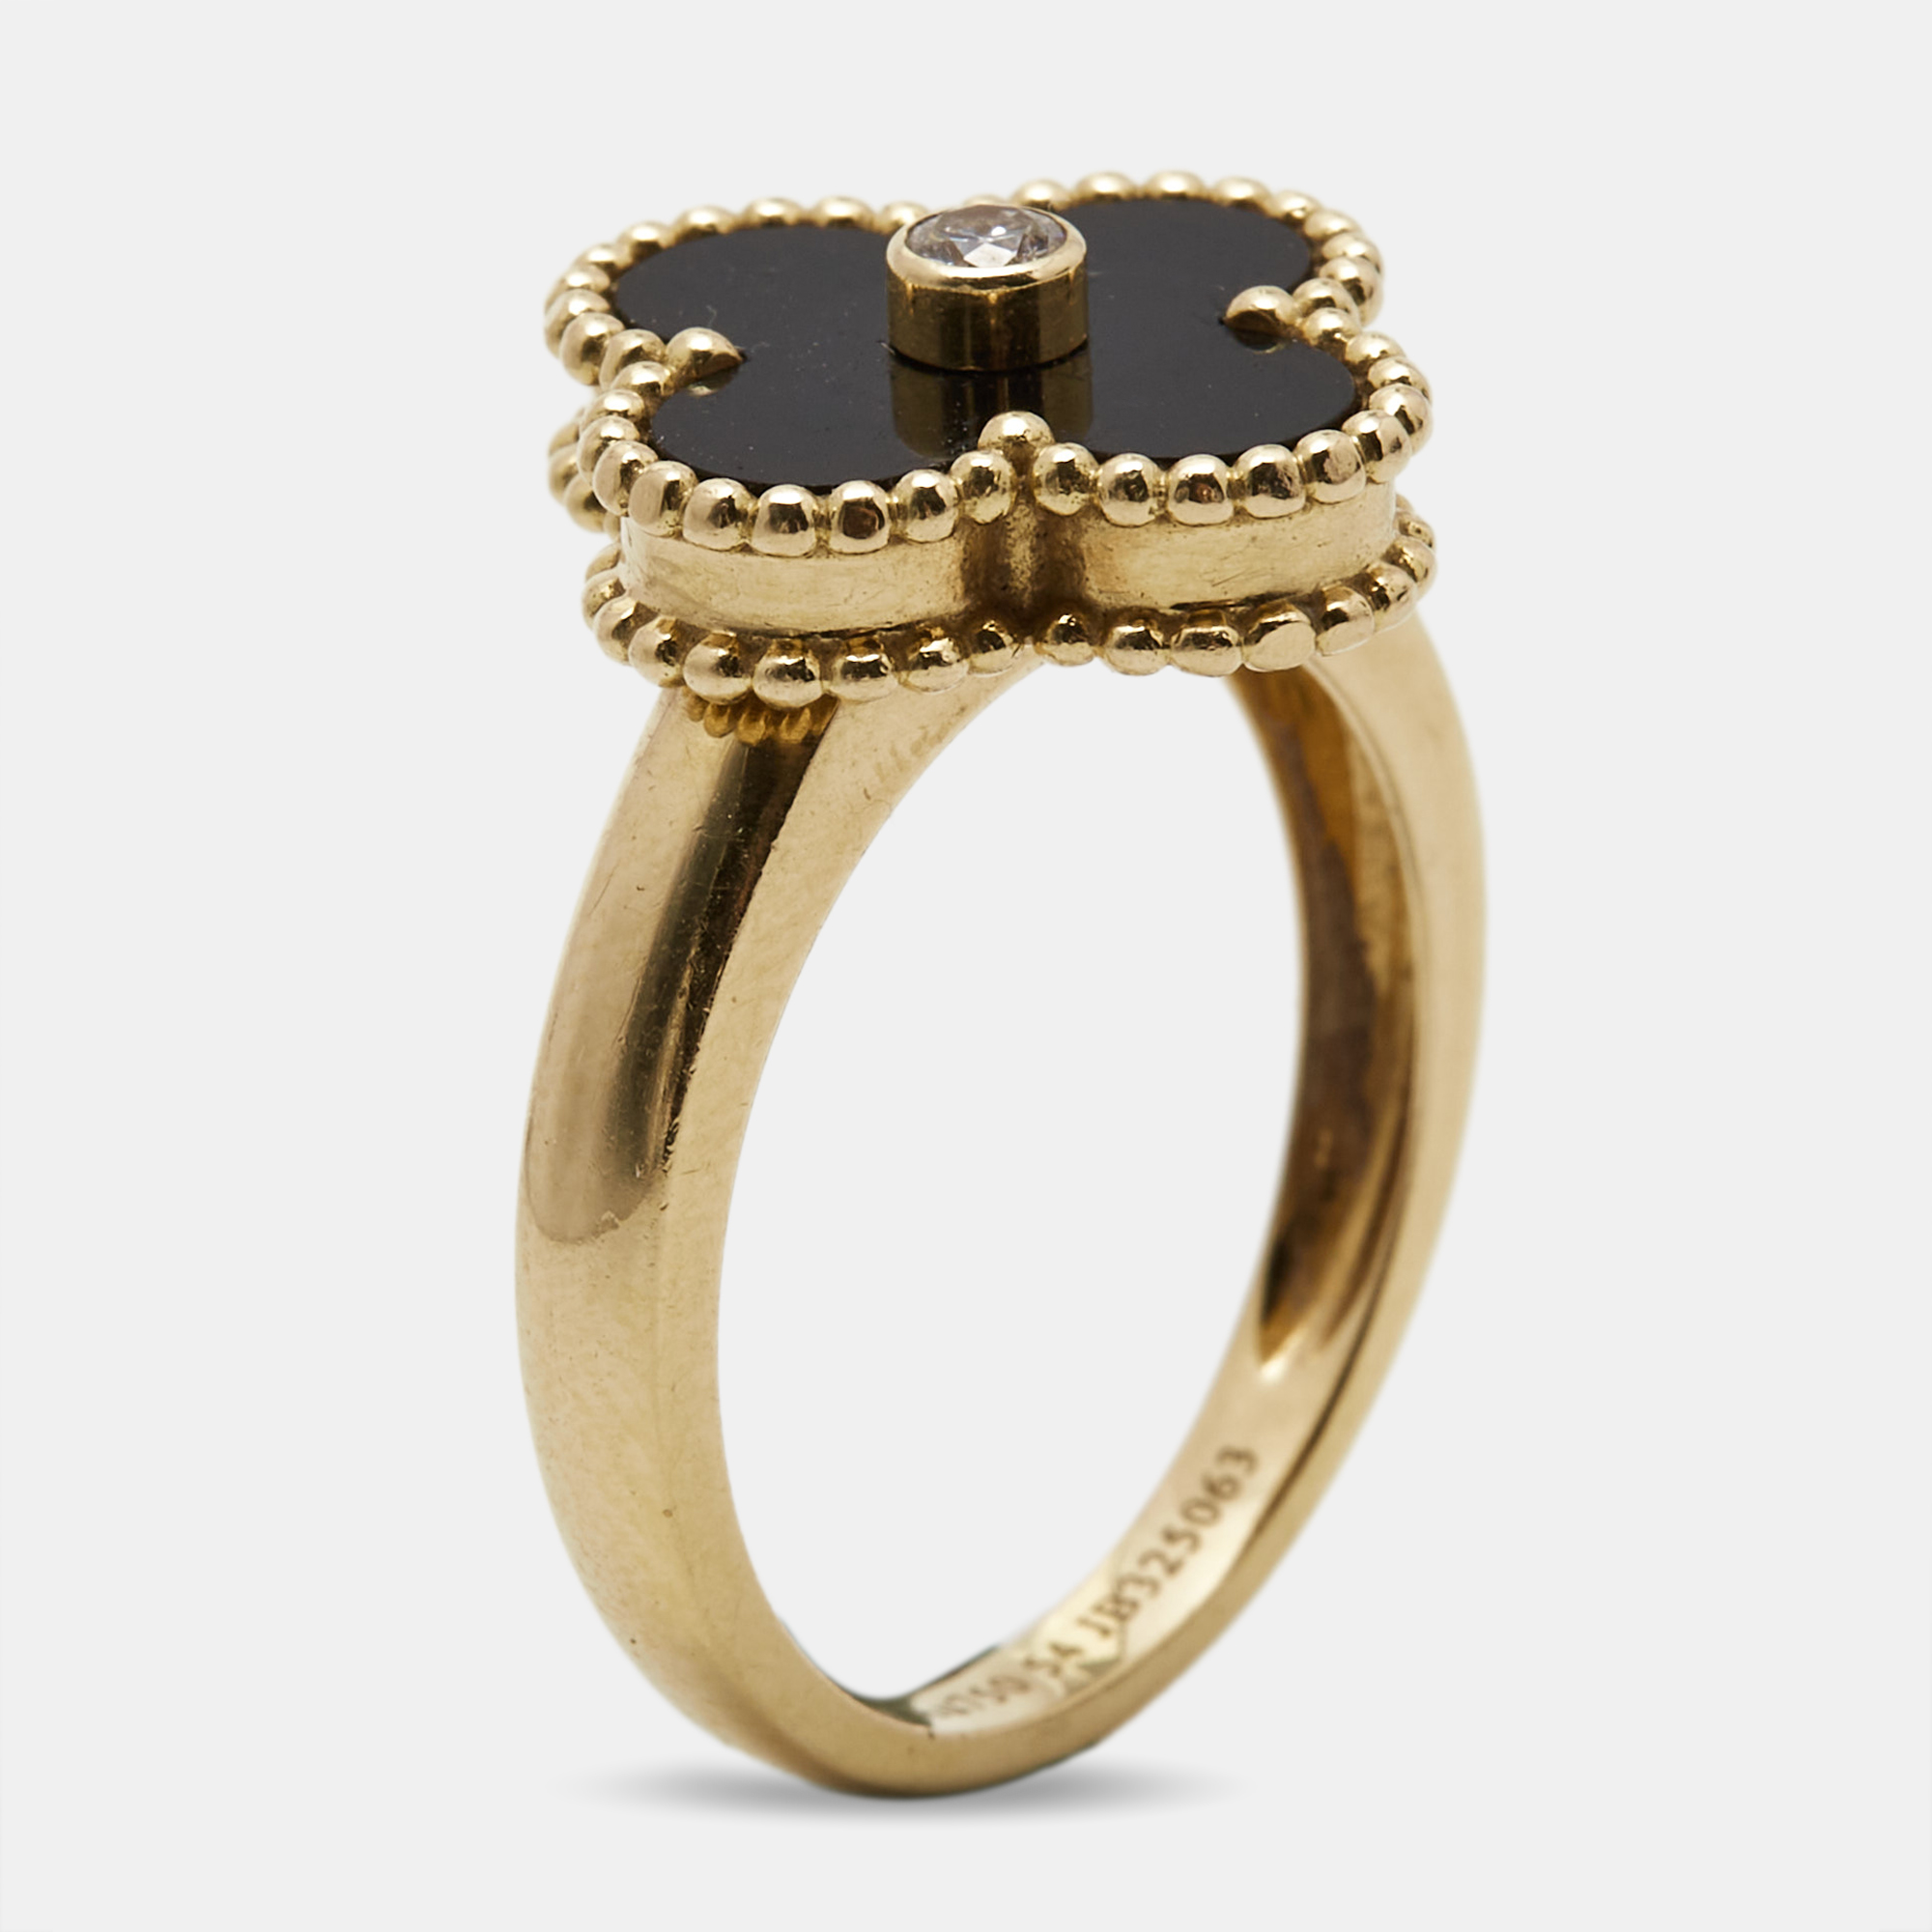 Van cleef & arpels vintage alhambra onyx diamond 18k yellow gold ring size 54